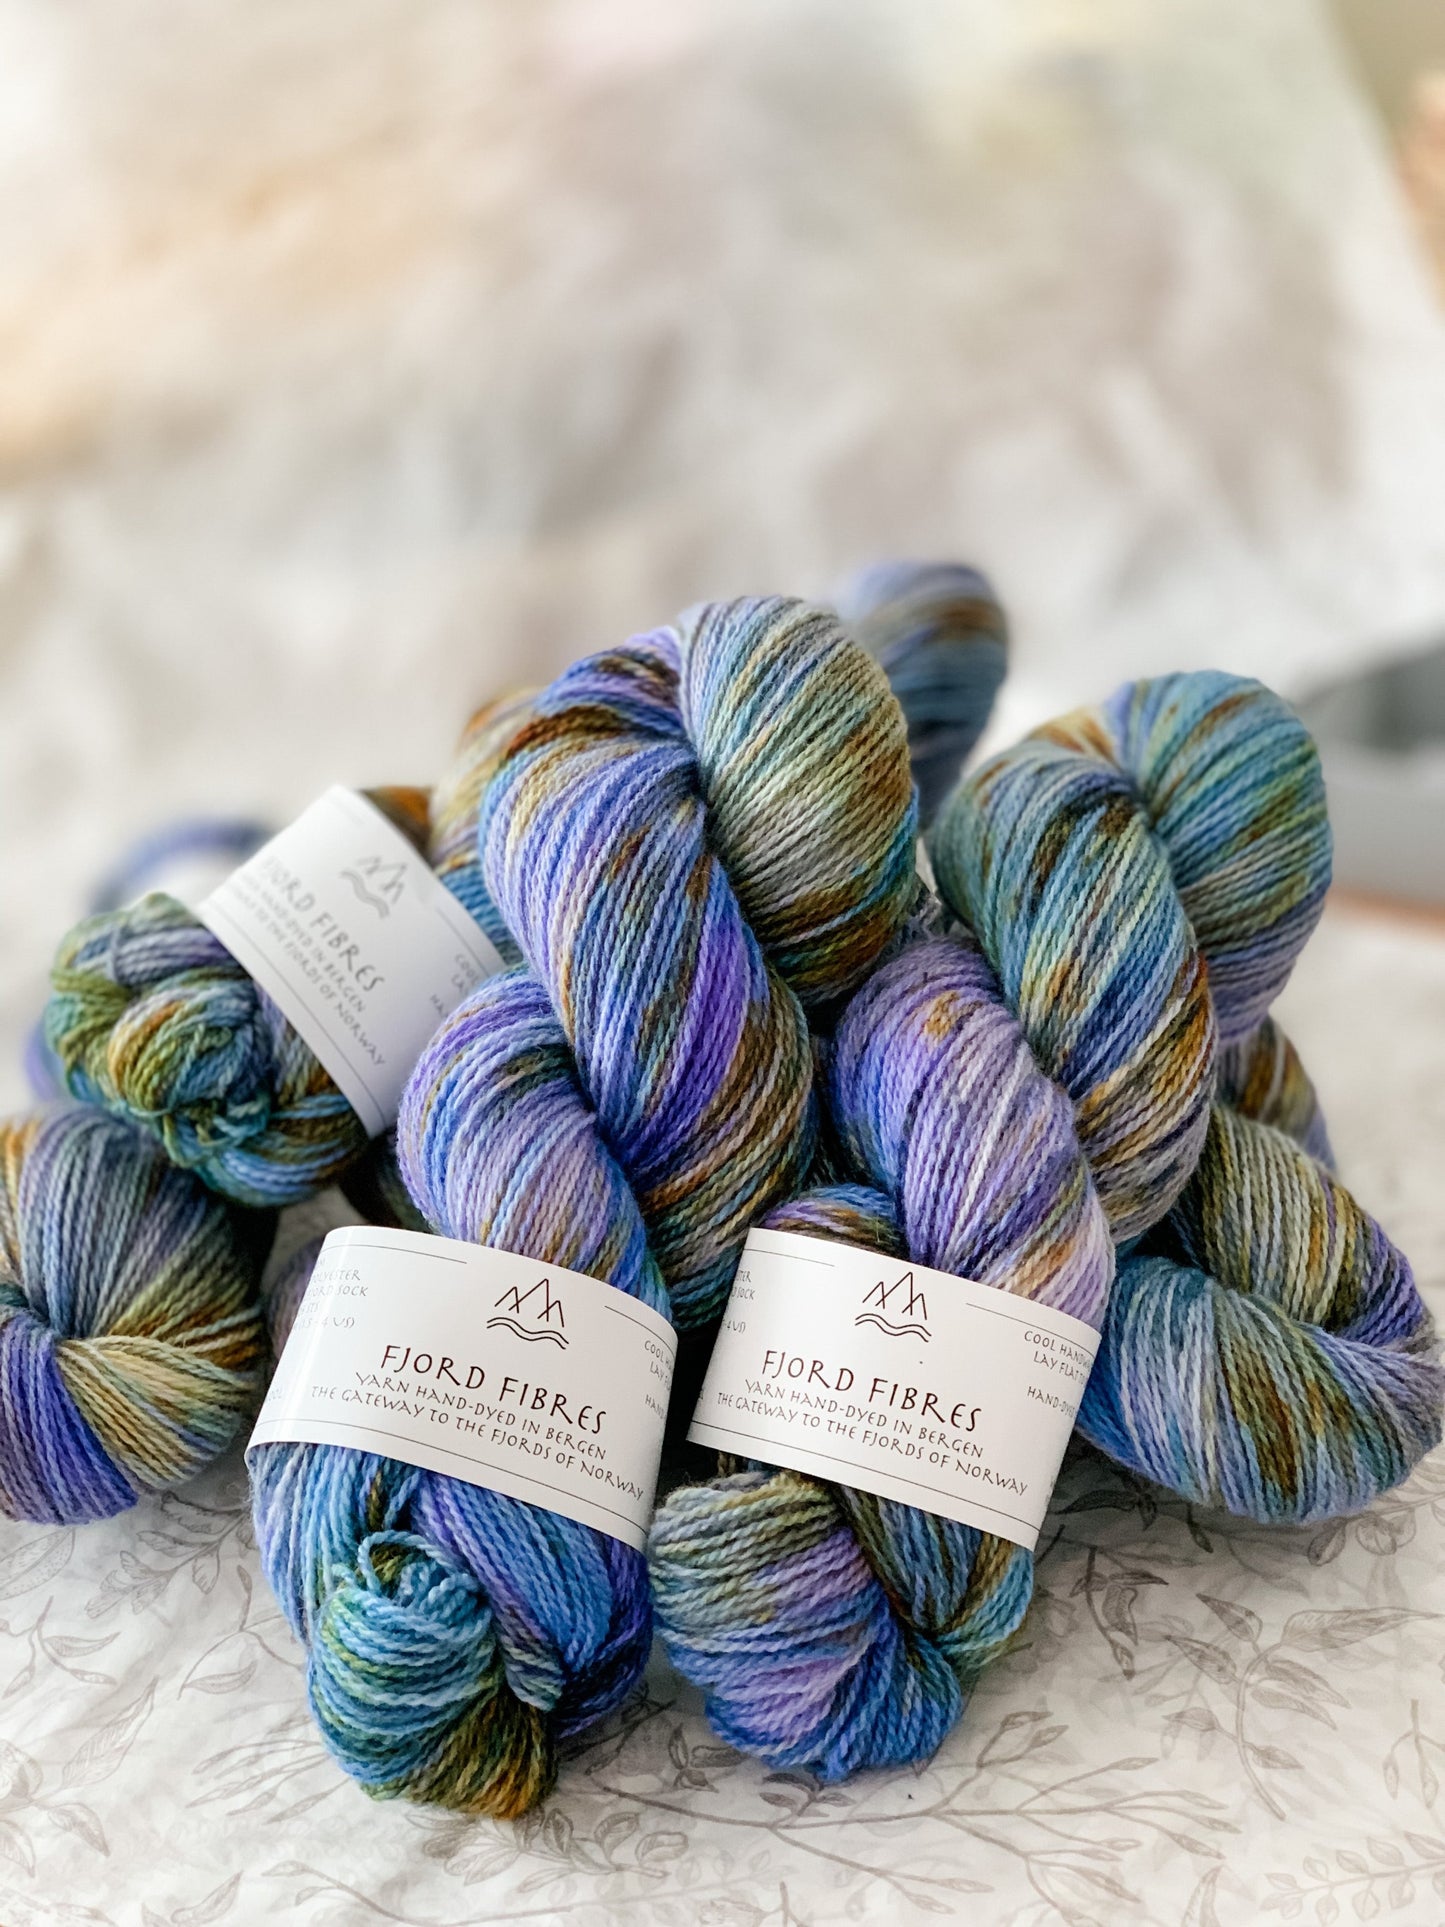 Iris Meadow - Trollfjord sock - Hand Dyed Yarn - Variegated Yarn